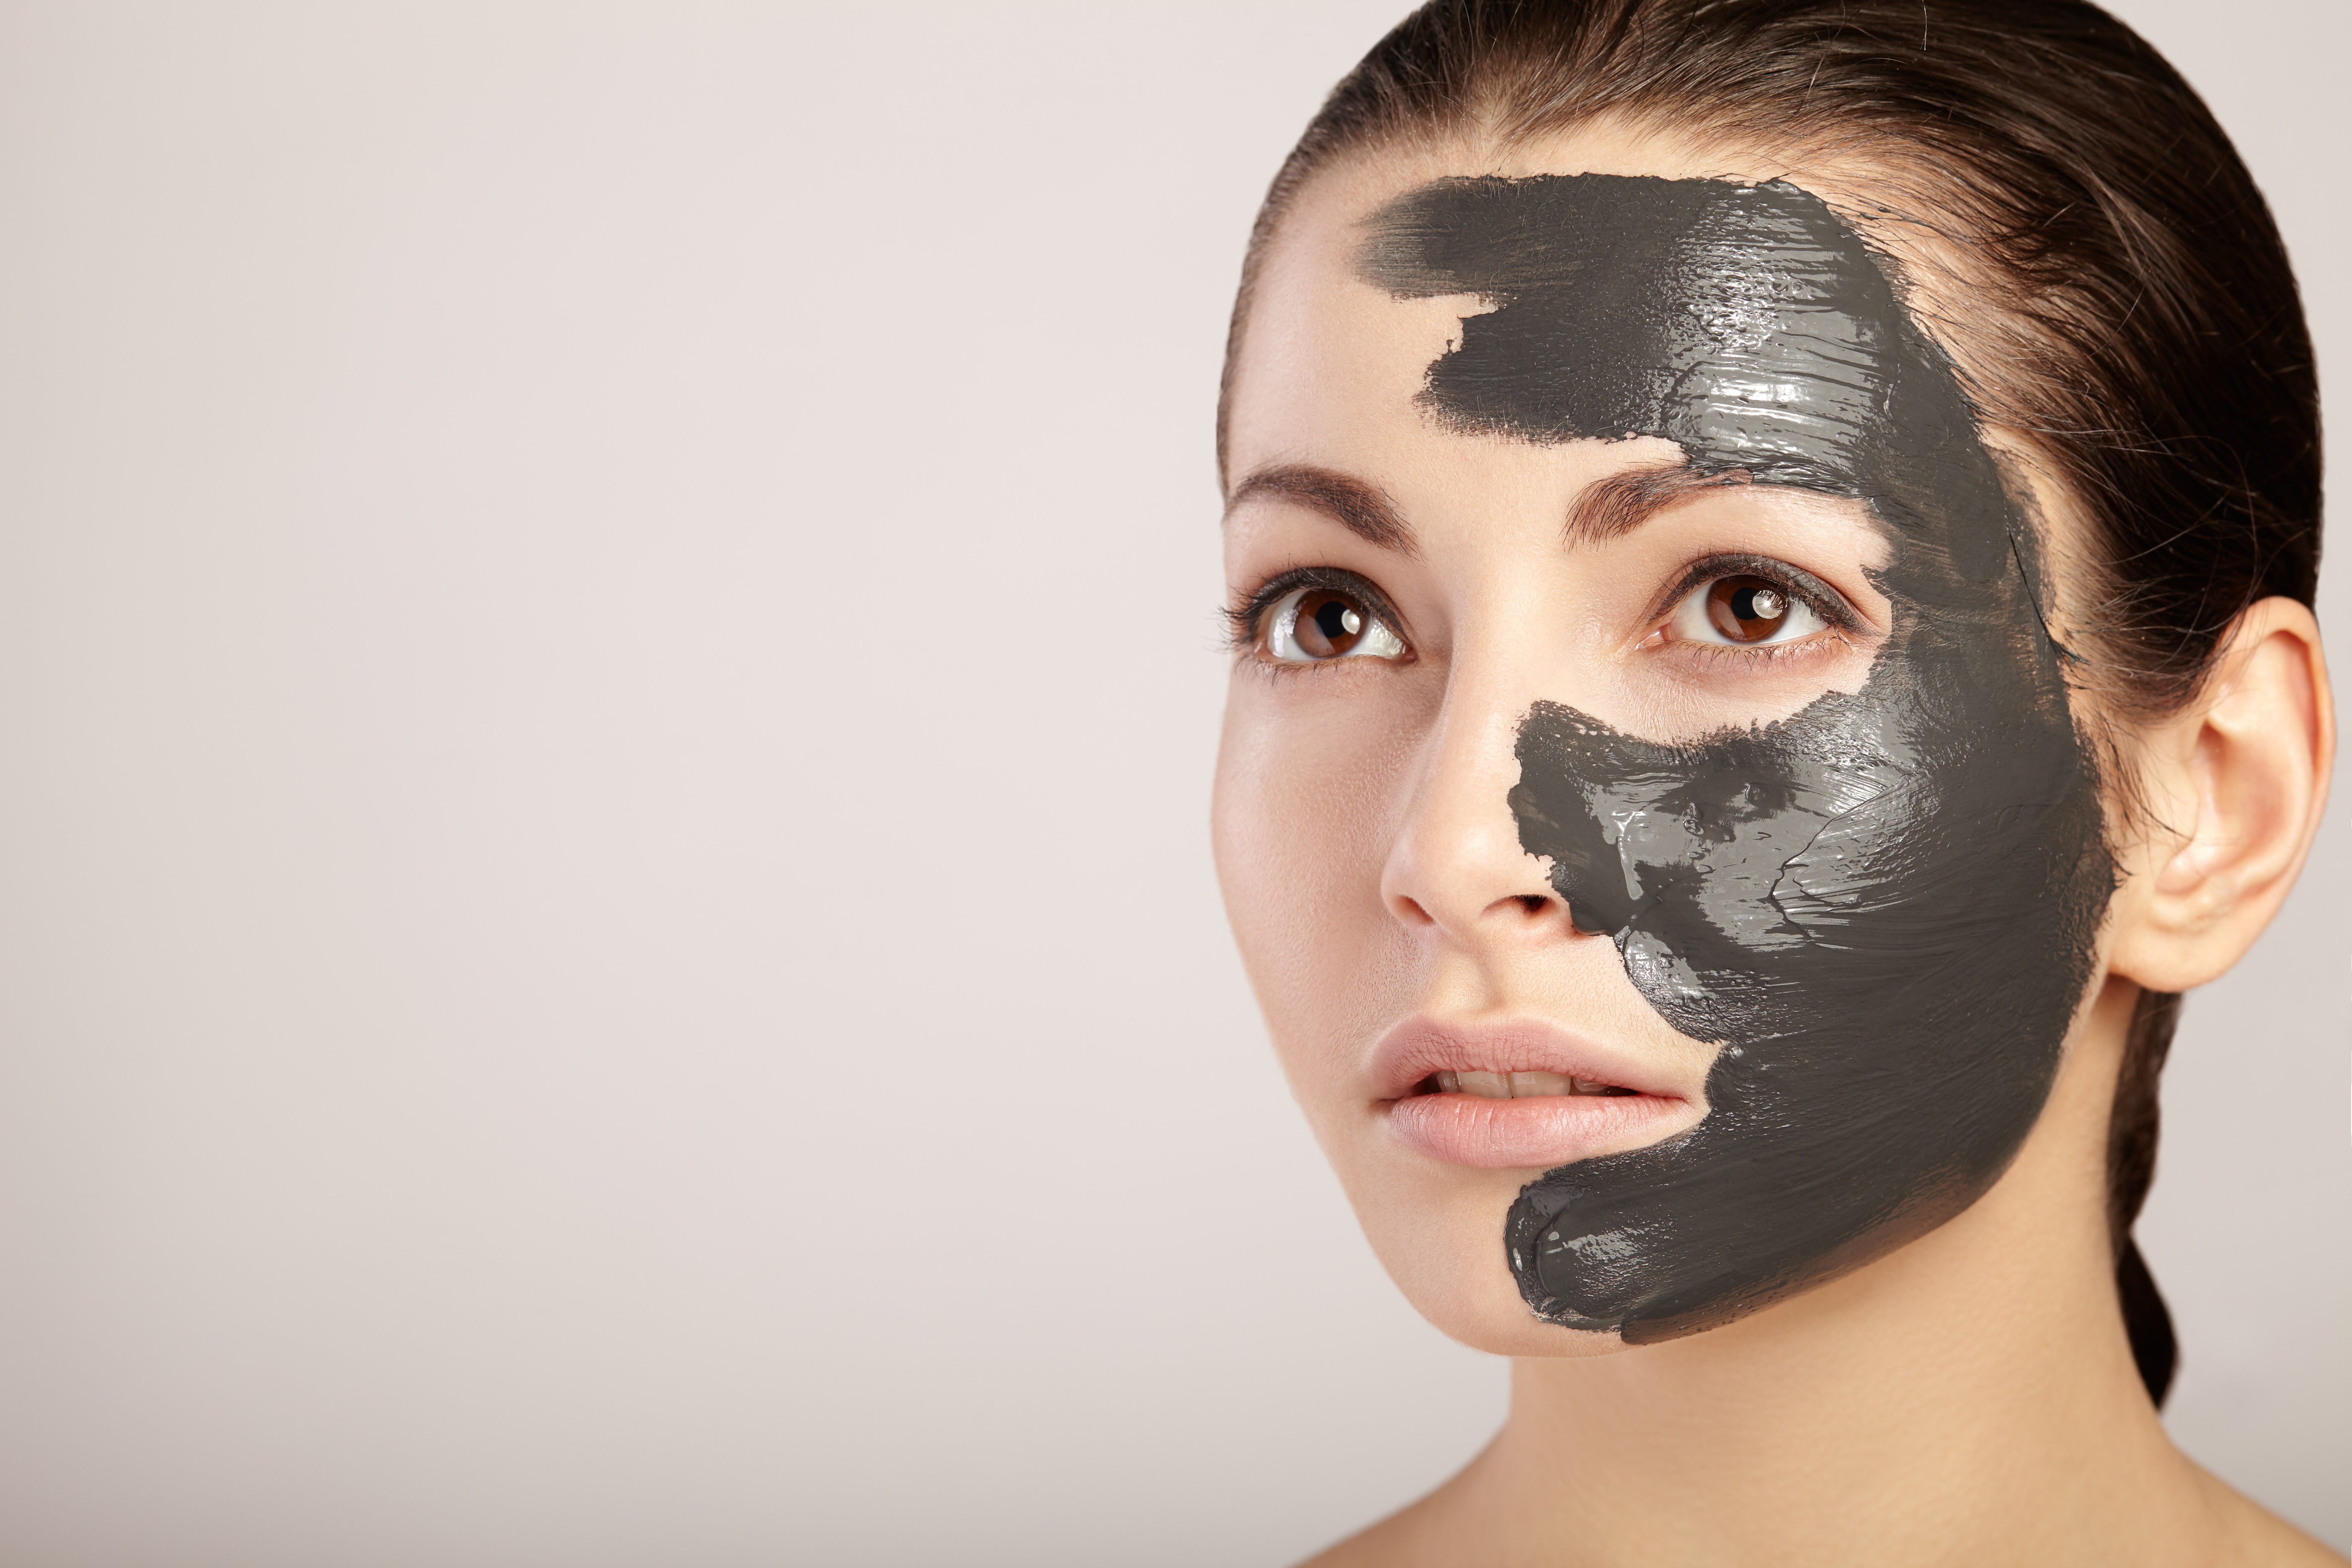 Traditional Masks vs Pore Strip Masks